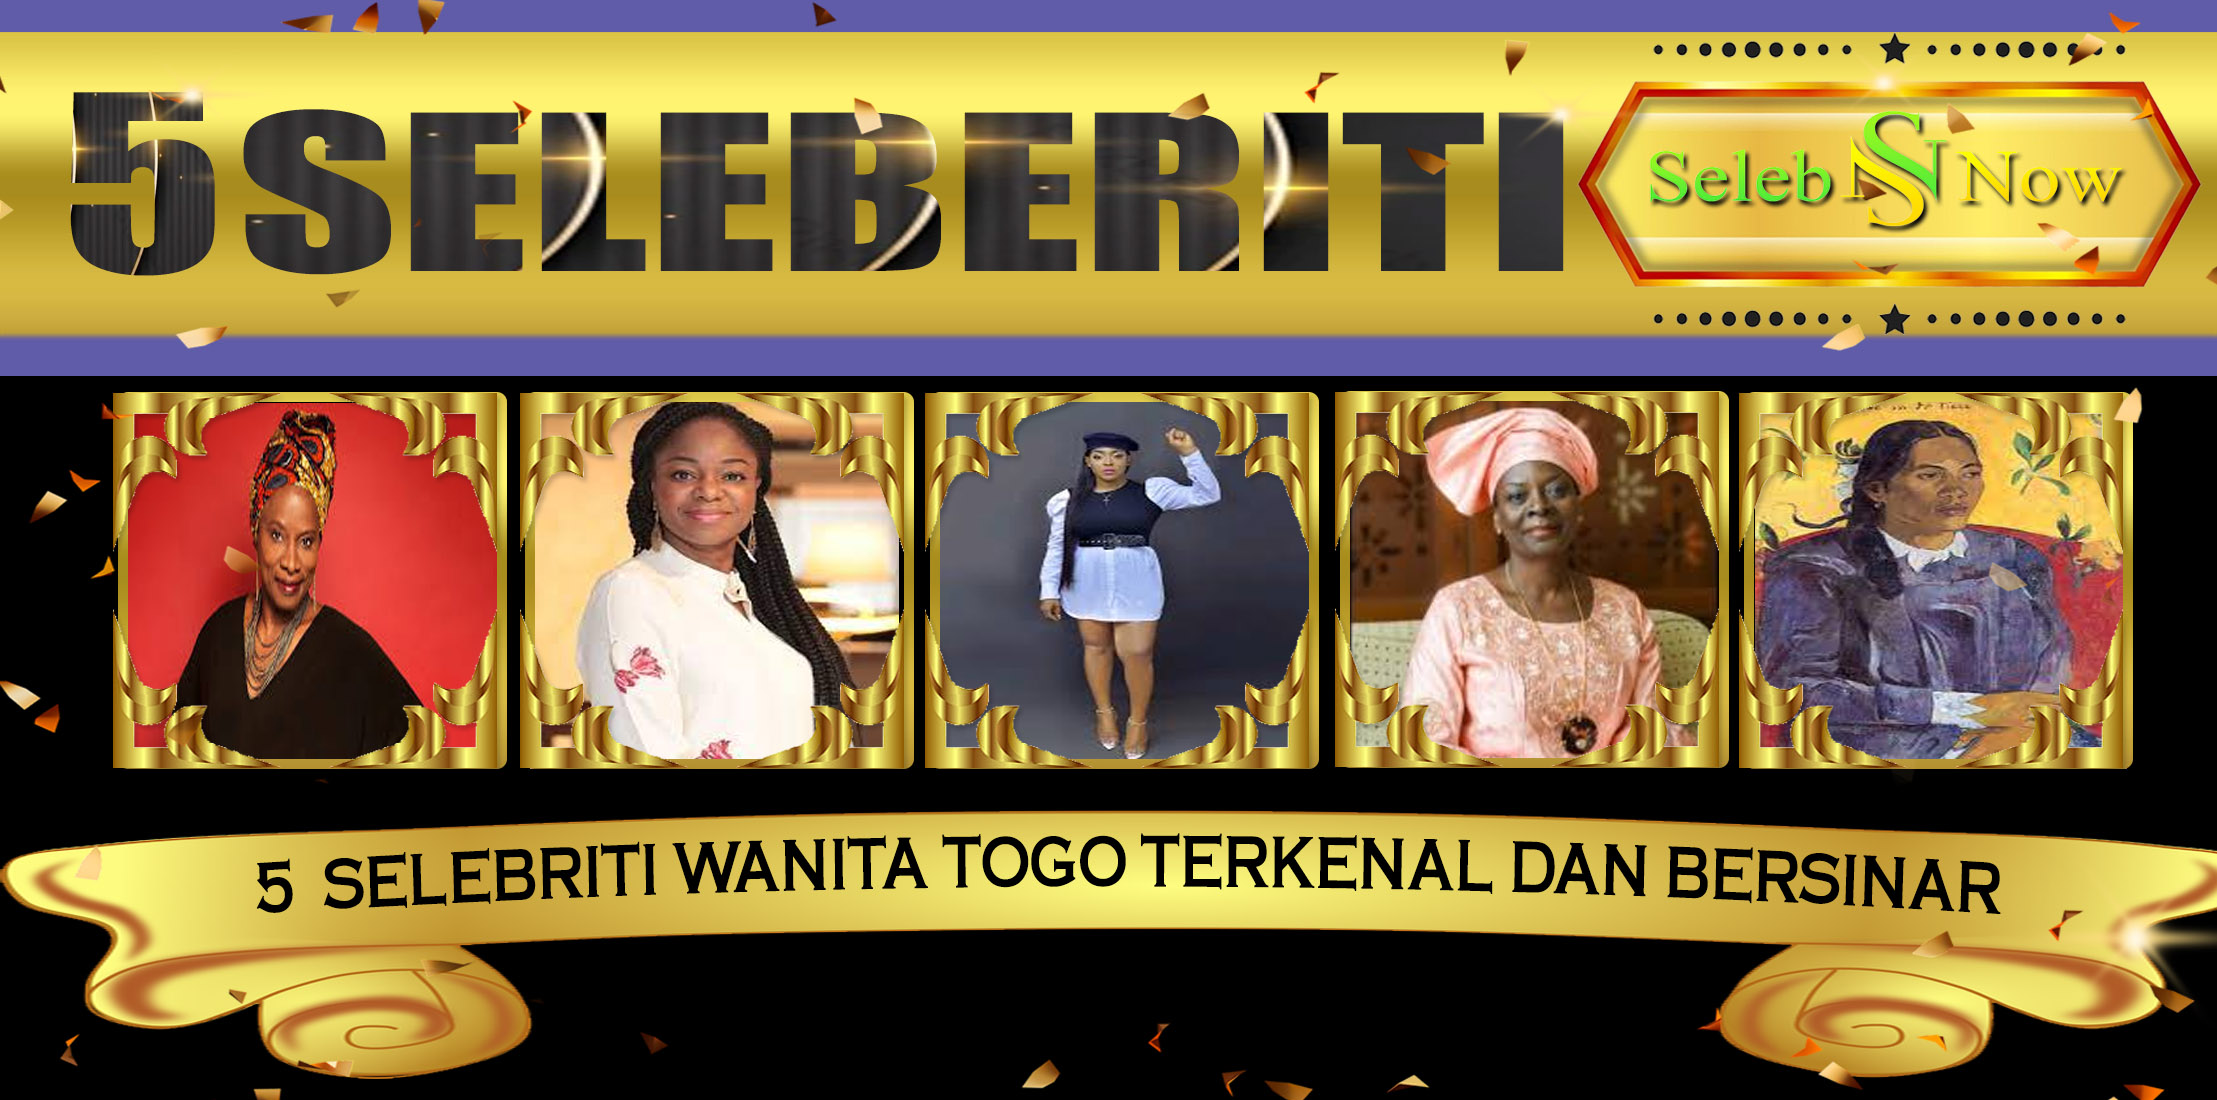 5 Selebriti Wanita Togo